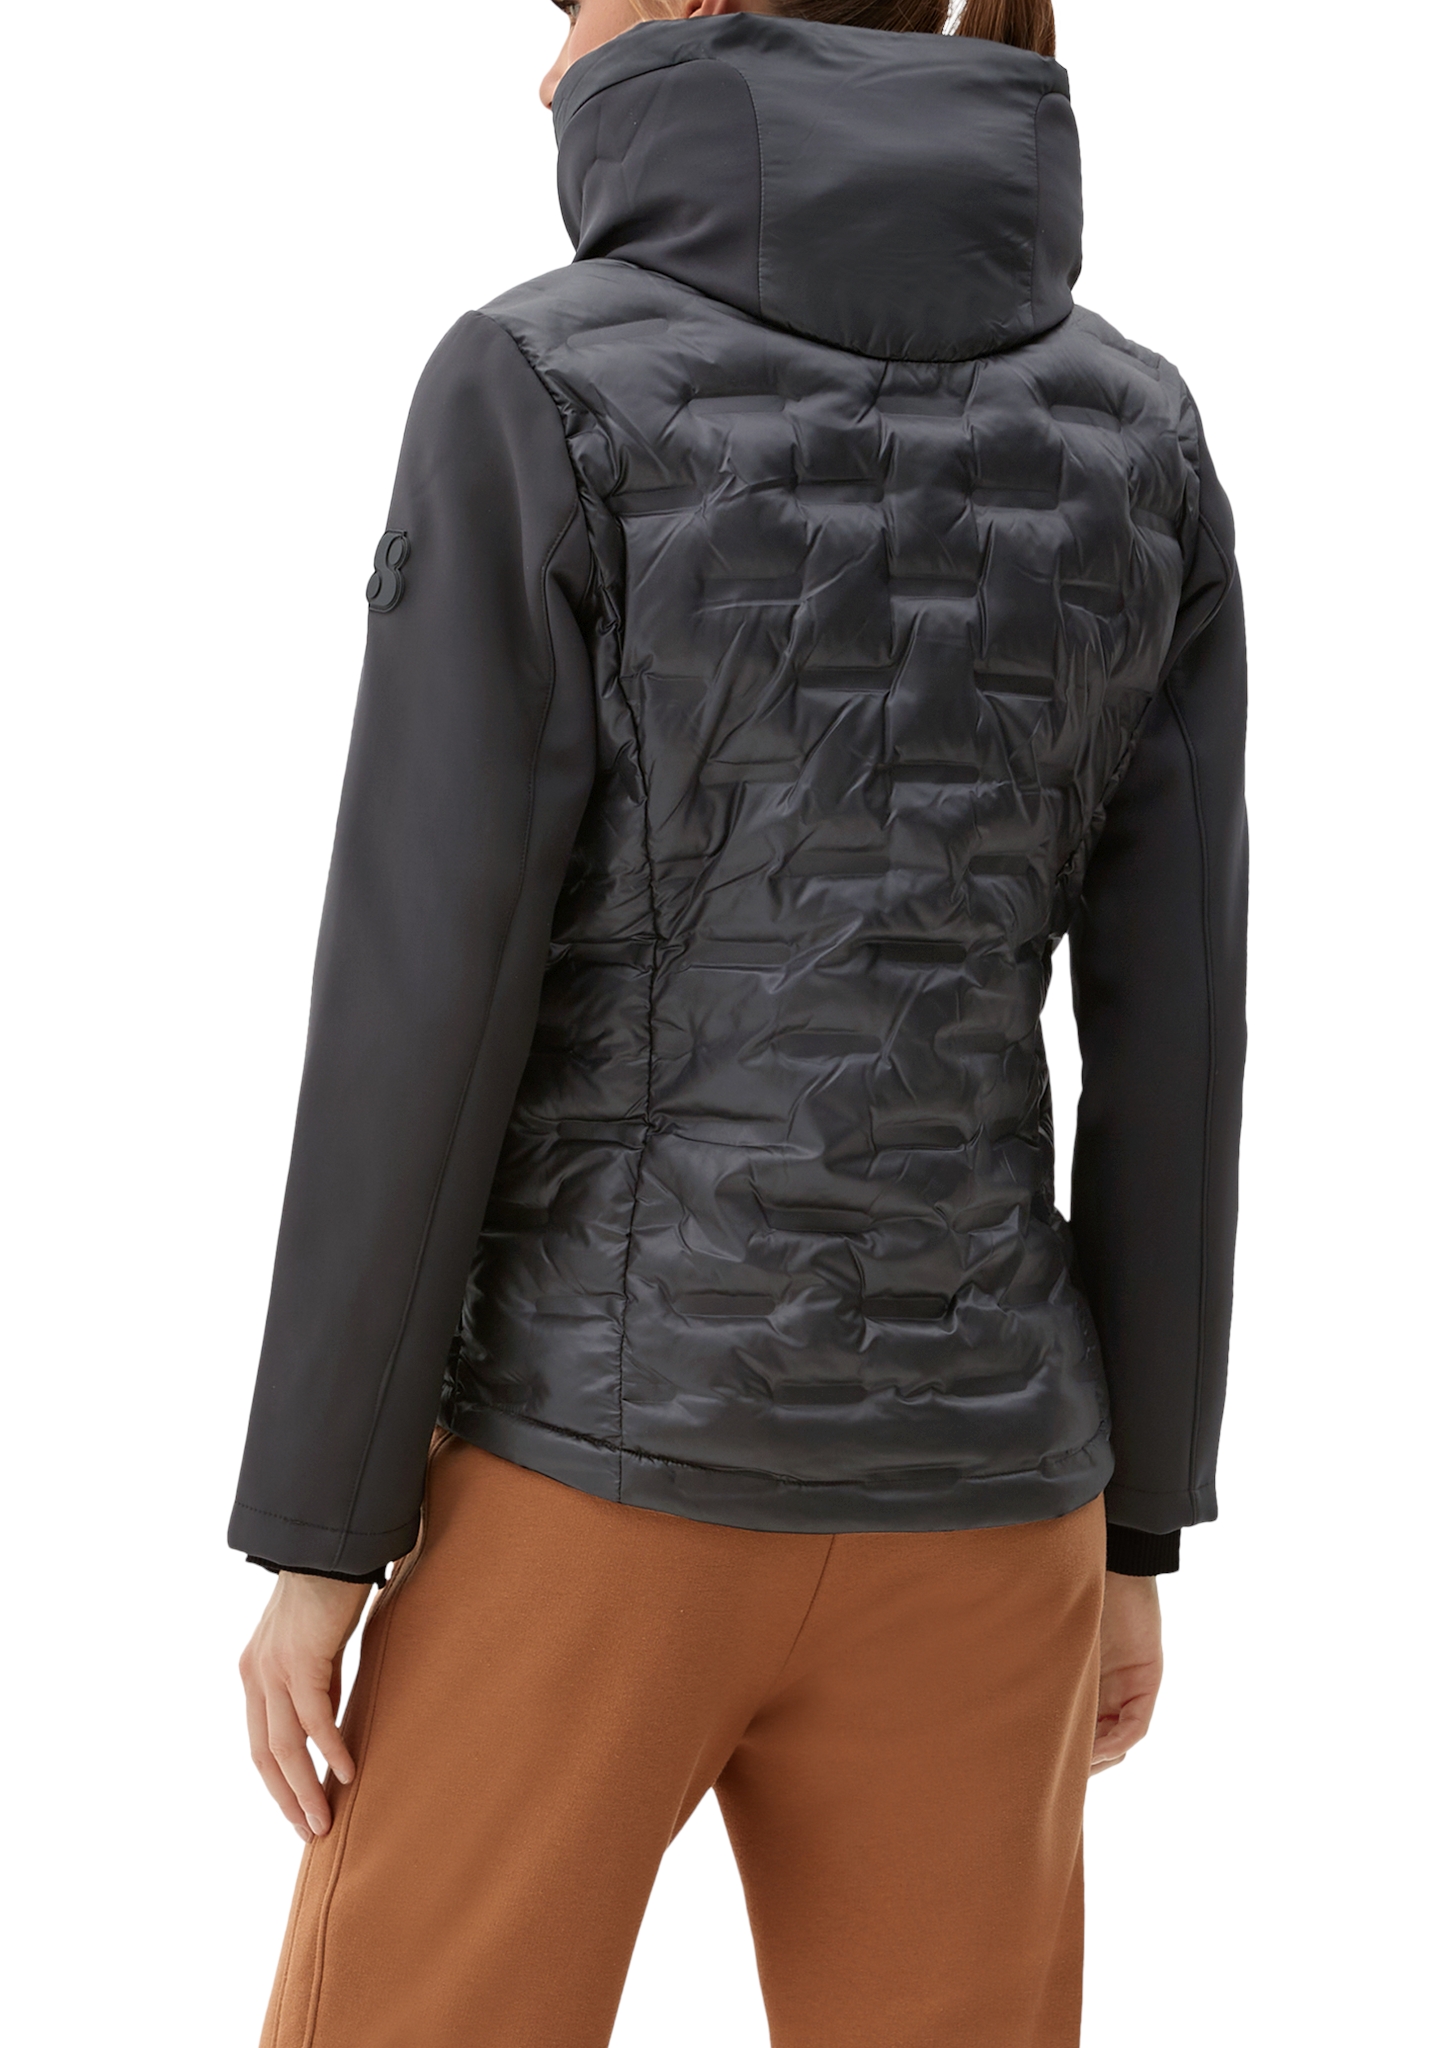 Outdoor-Jacke online black kaufen s.Oliver